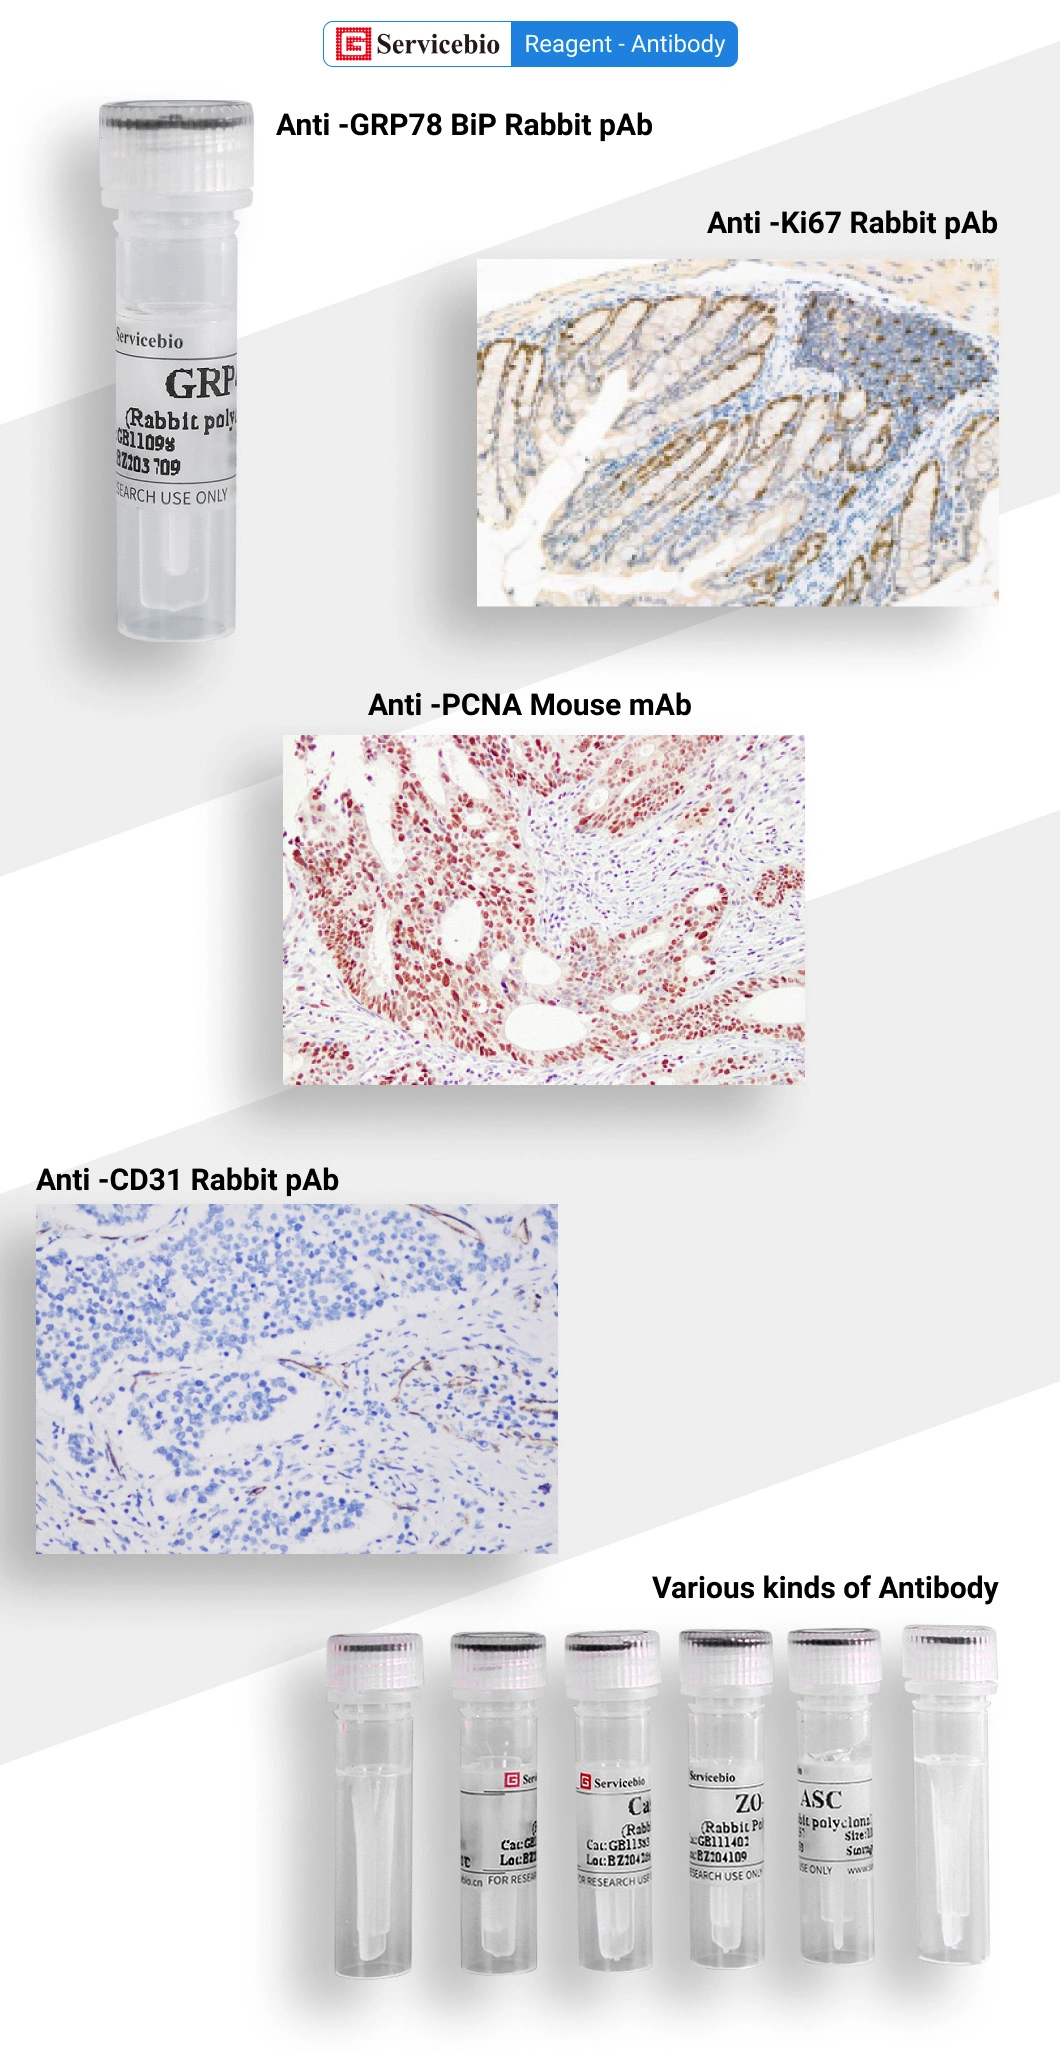 Tag Antibodies Recombinant Mouse Mab Monoclonal Myc Tag Antibody